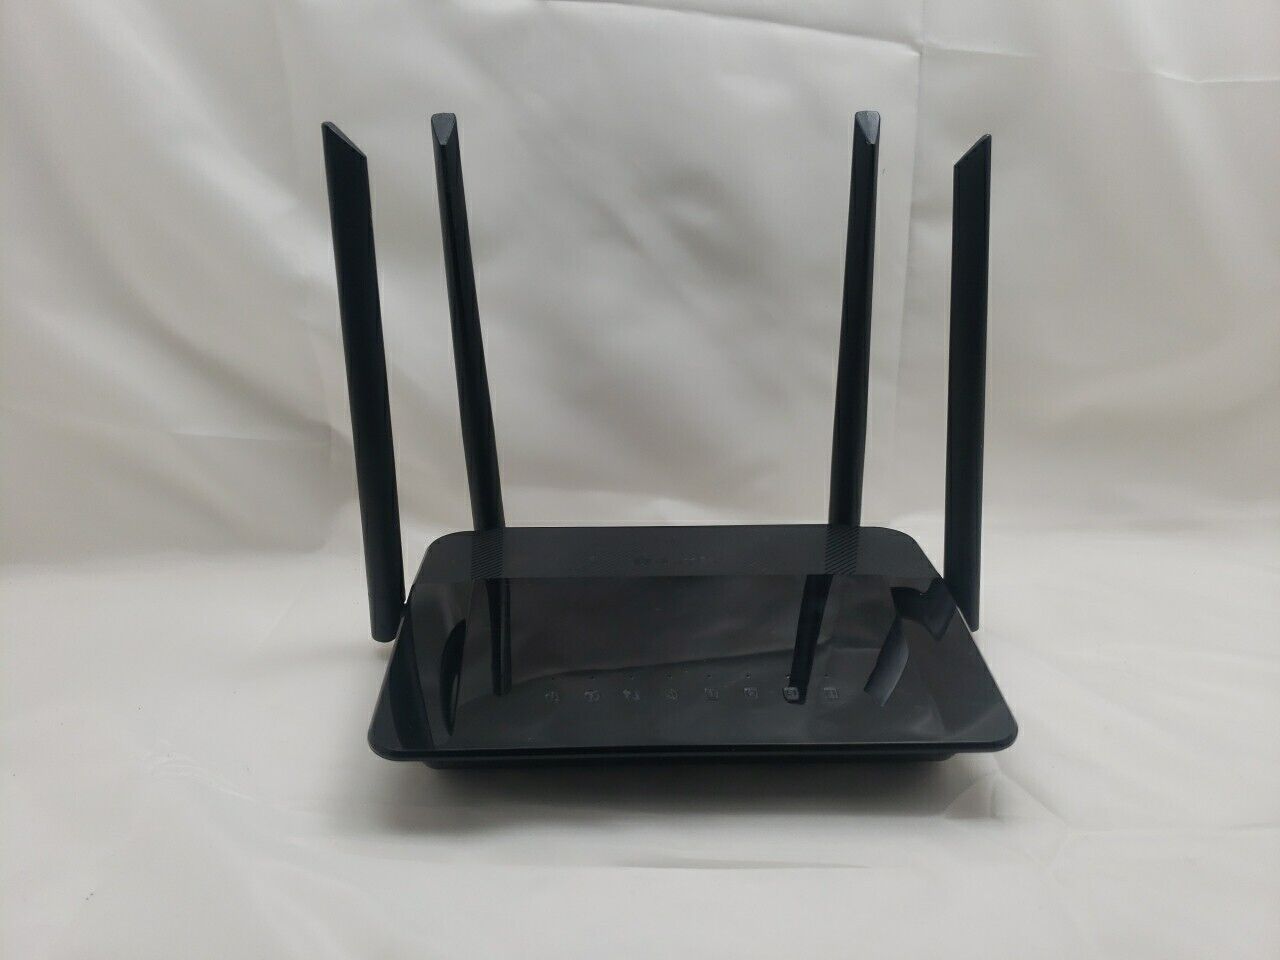 D-Link DIR-842 Wi-Fi Router